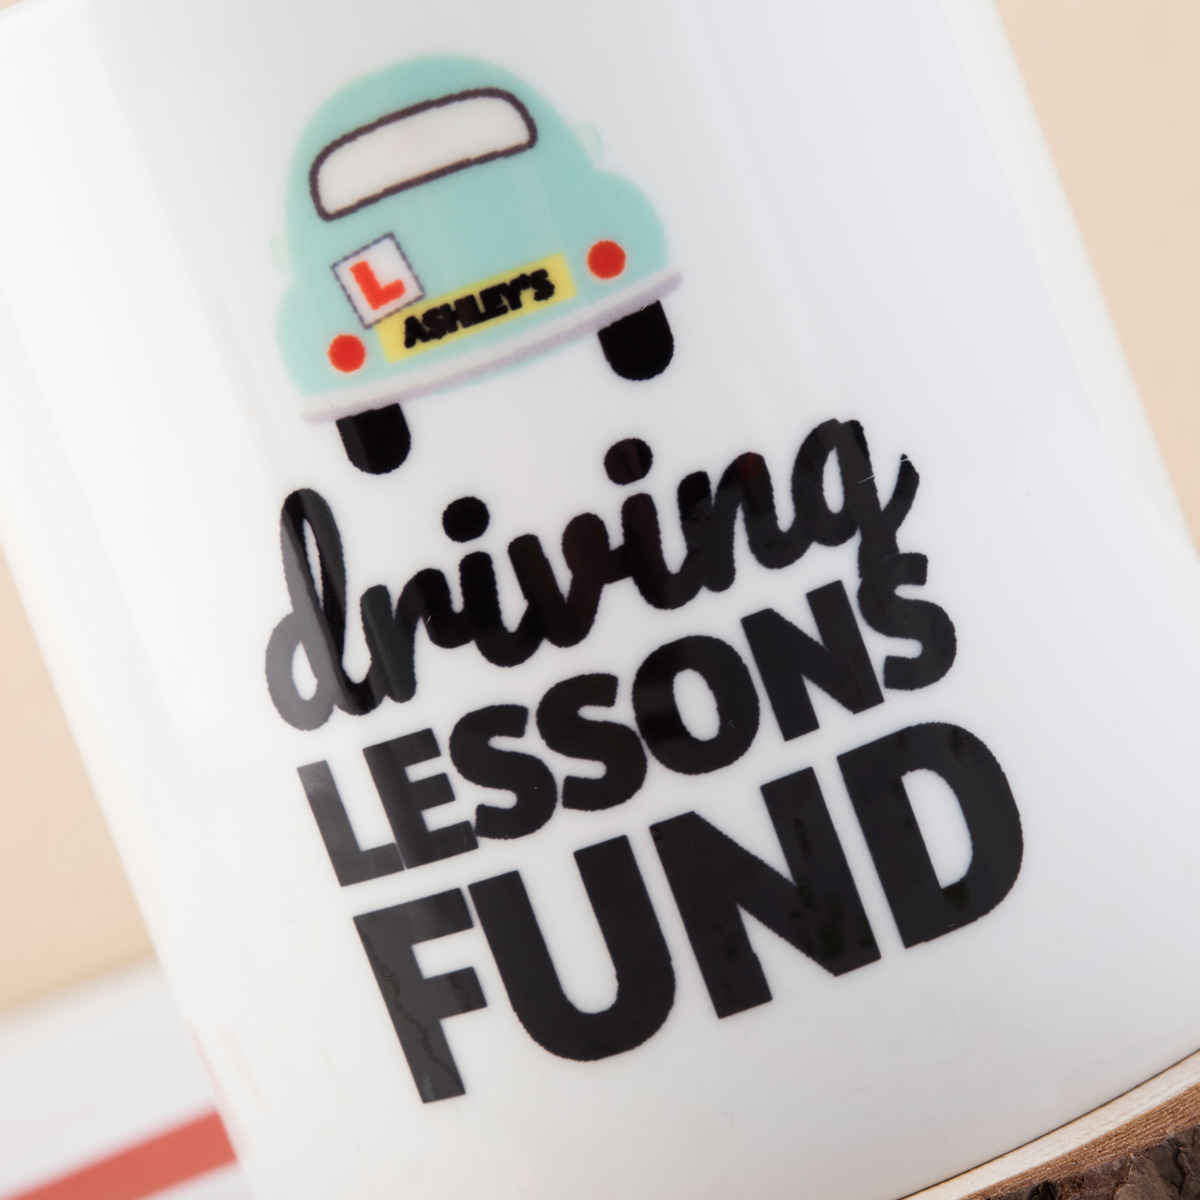 Personalised Ceramic Money Box - Driving Lessons Fund